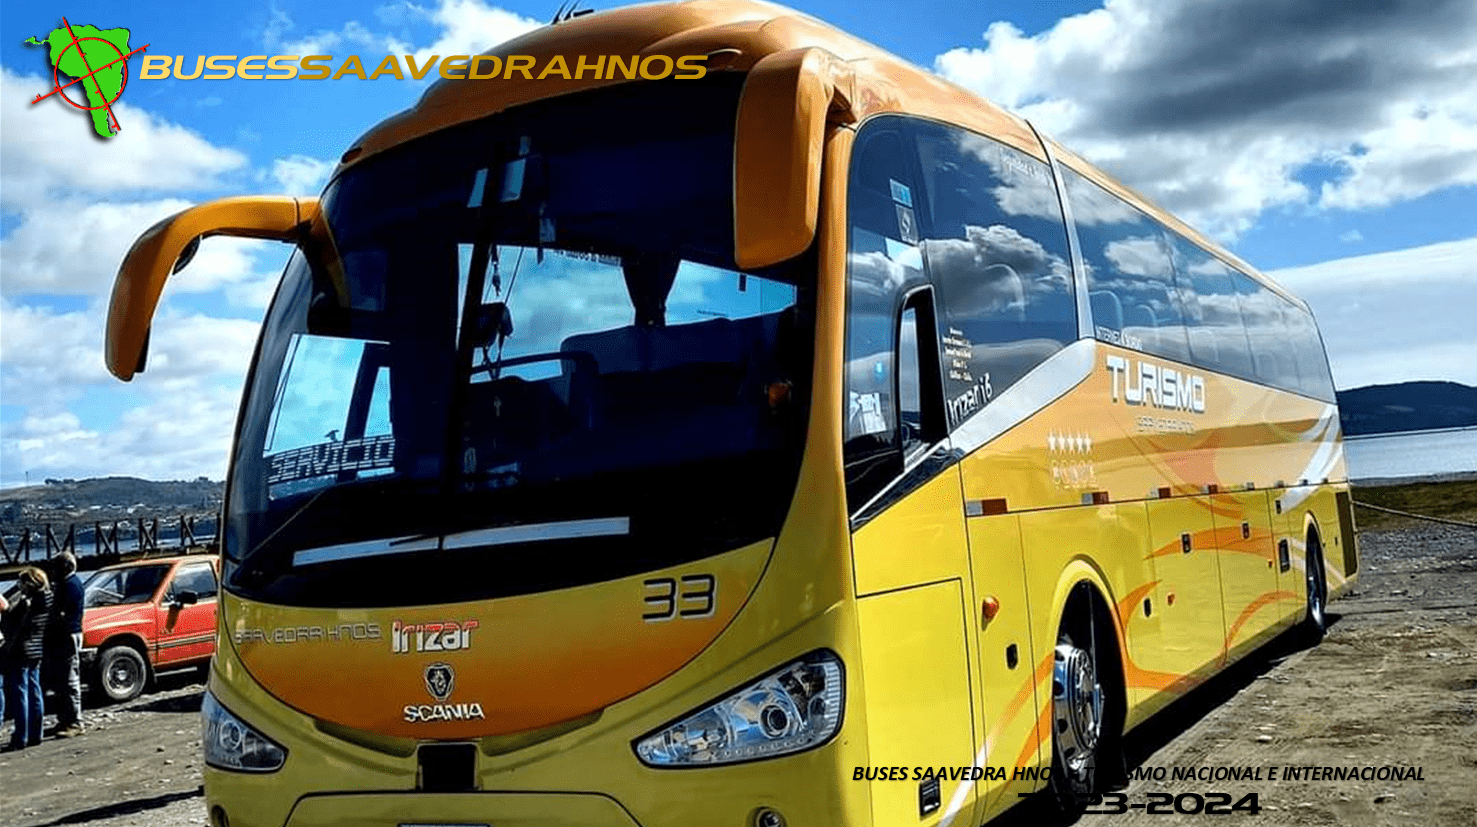 Buses Saavedra Hnos - Turismo - 10-min